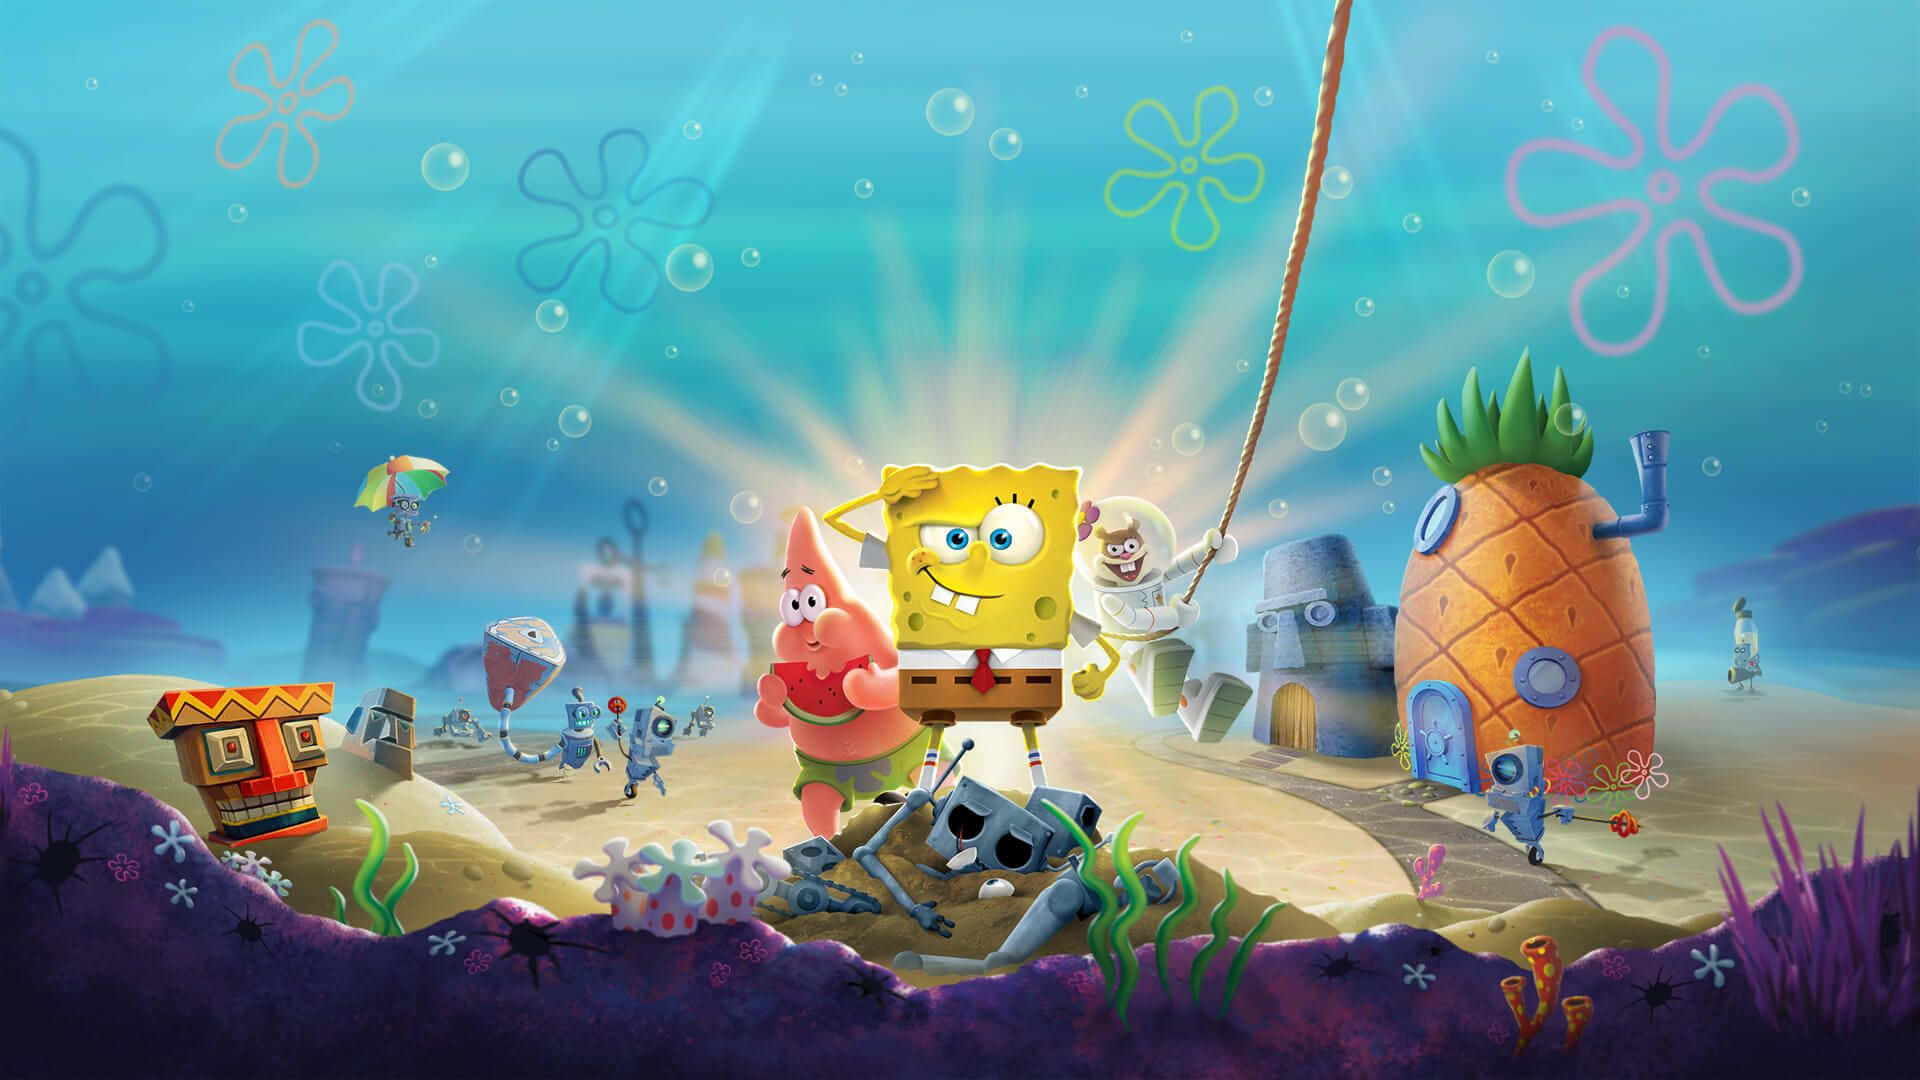 Brighten Up Your Desktop With This Classic Image Of Spongebob! Background